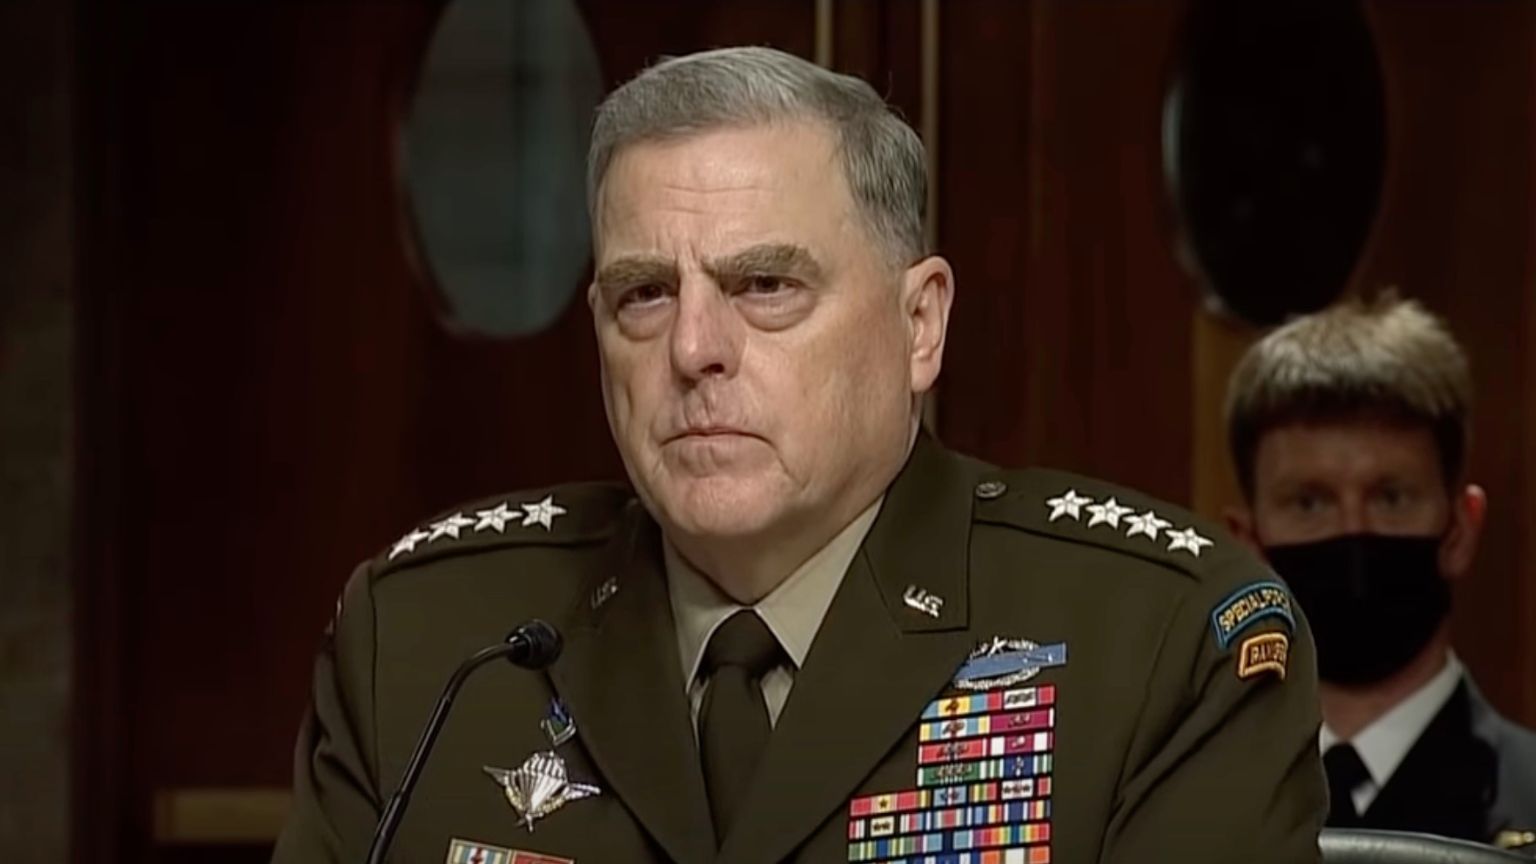 The Pentagon Scans Social Media To Prevent “Embarrassment” of Generals